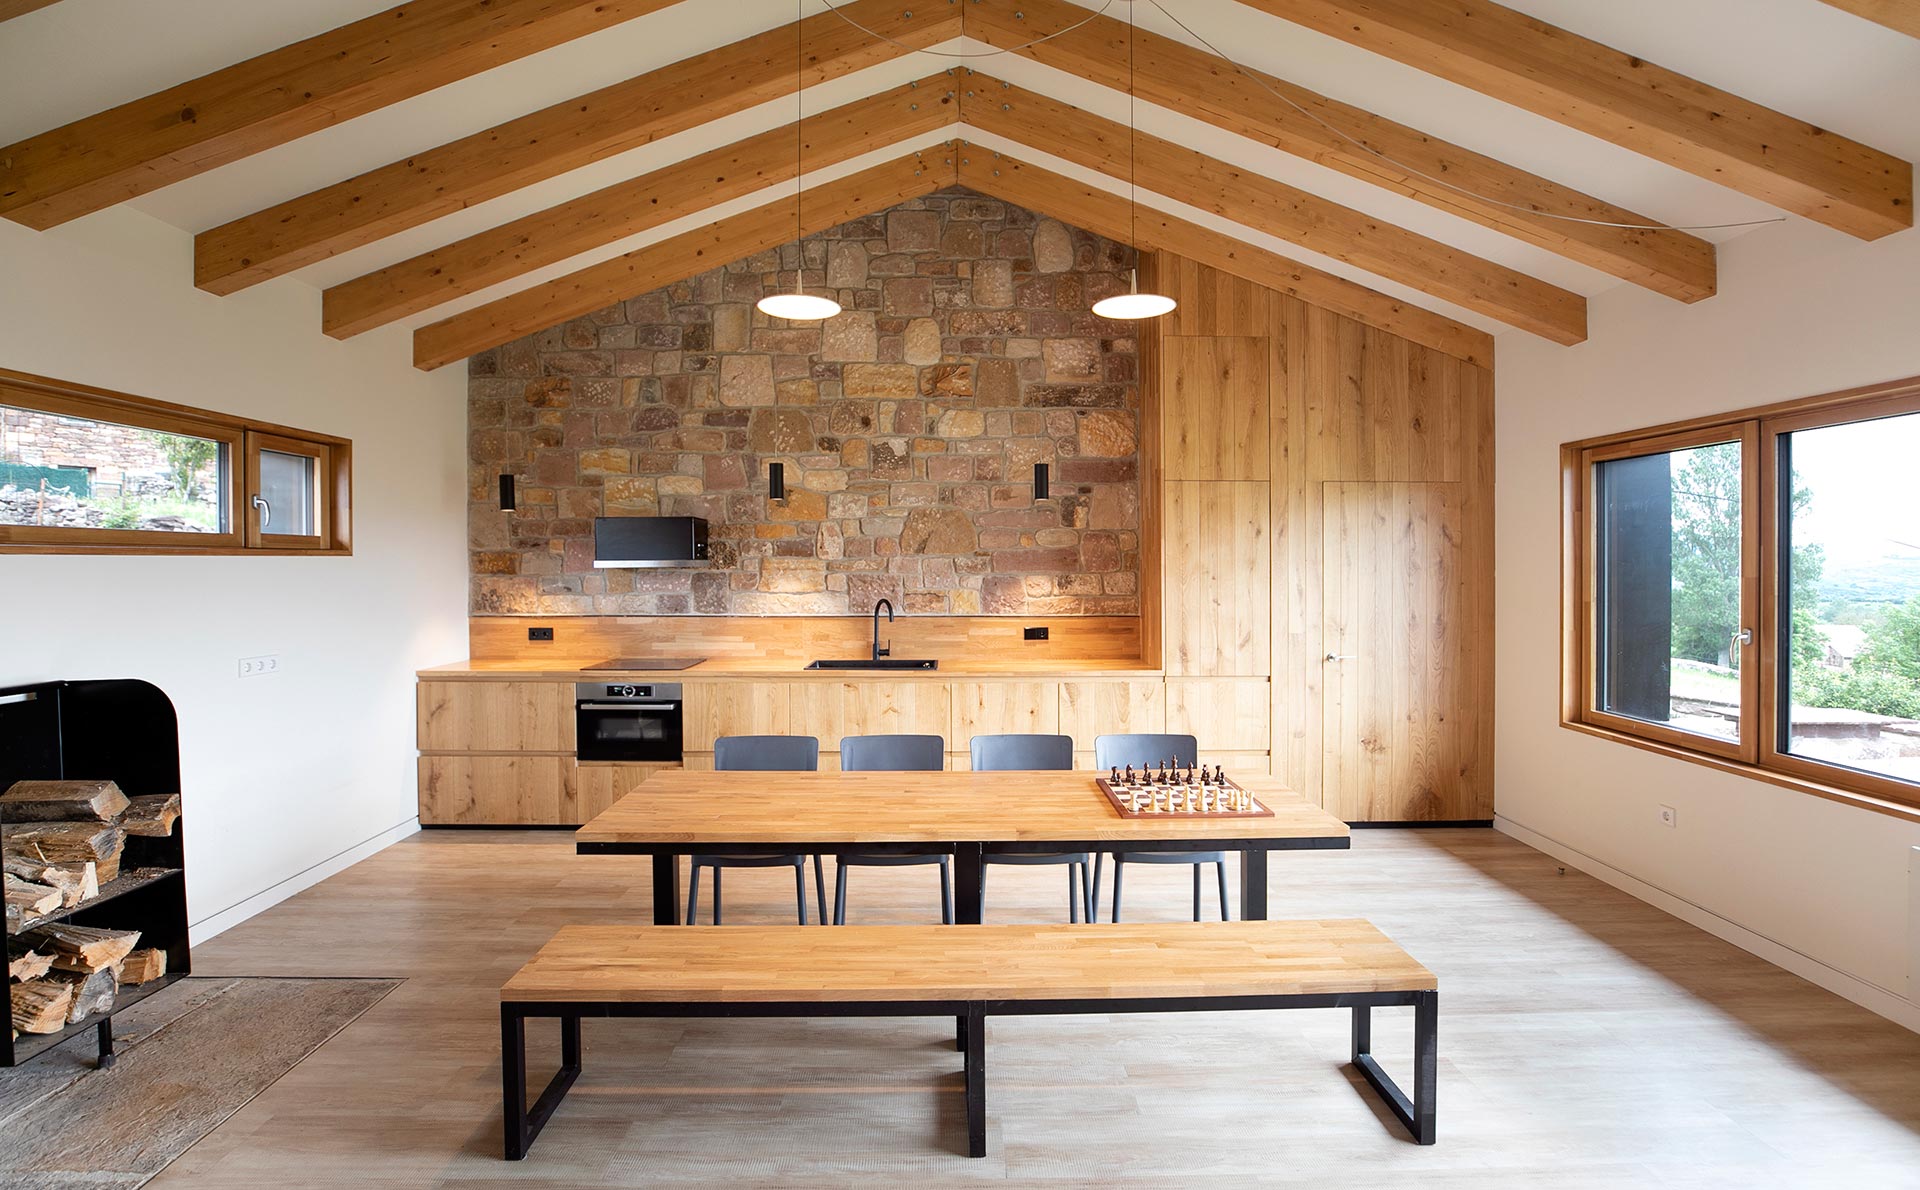 Comedor y cocina de madera de cabaña pasiva en Proaño diseñada por Moah Arquitectos en Cantabria